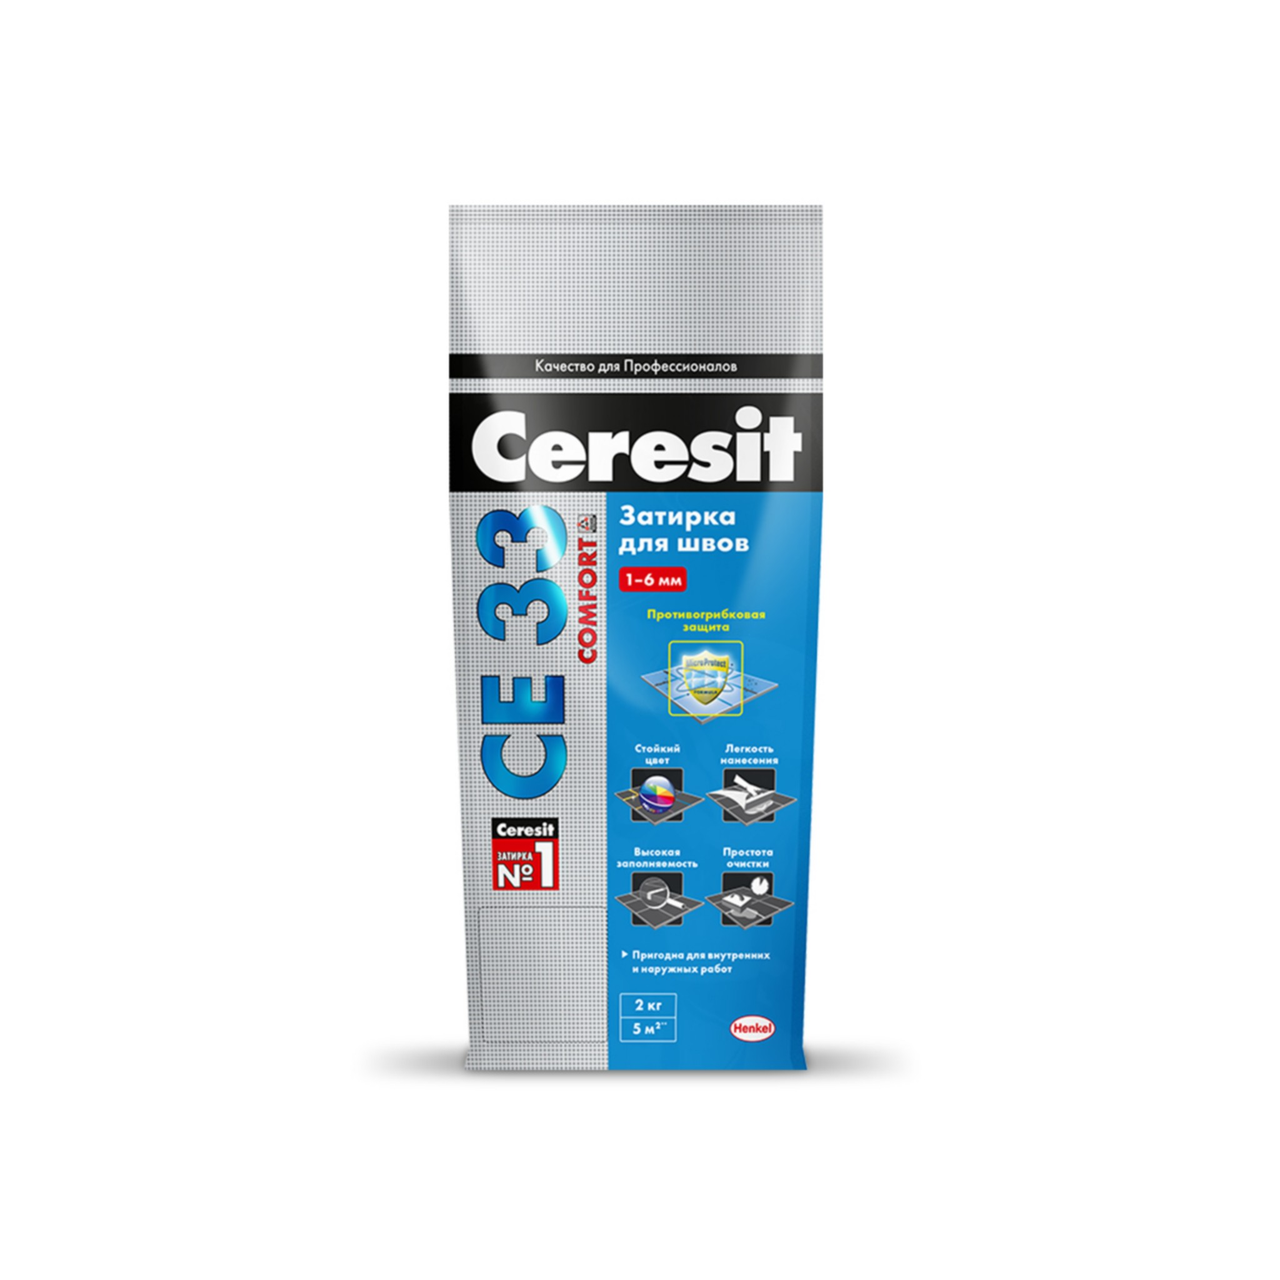 Ceresit  CE 33 Comfort затирка для узких швов, цвет: Белый (White), 5 кг